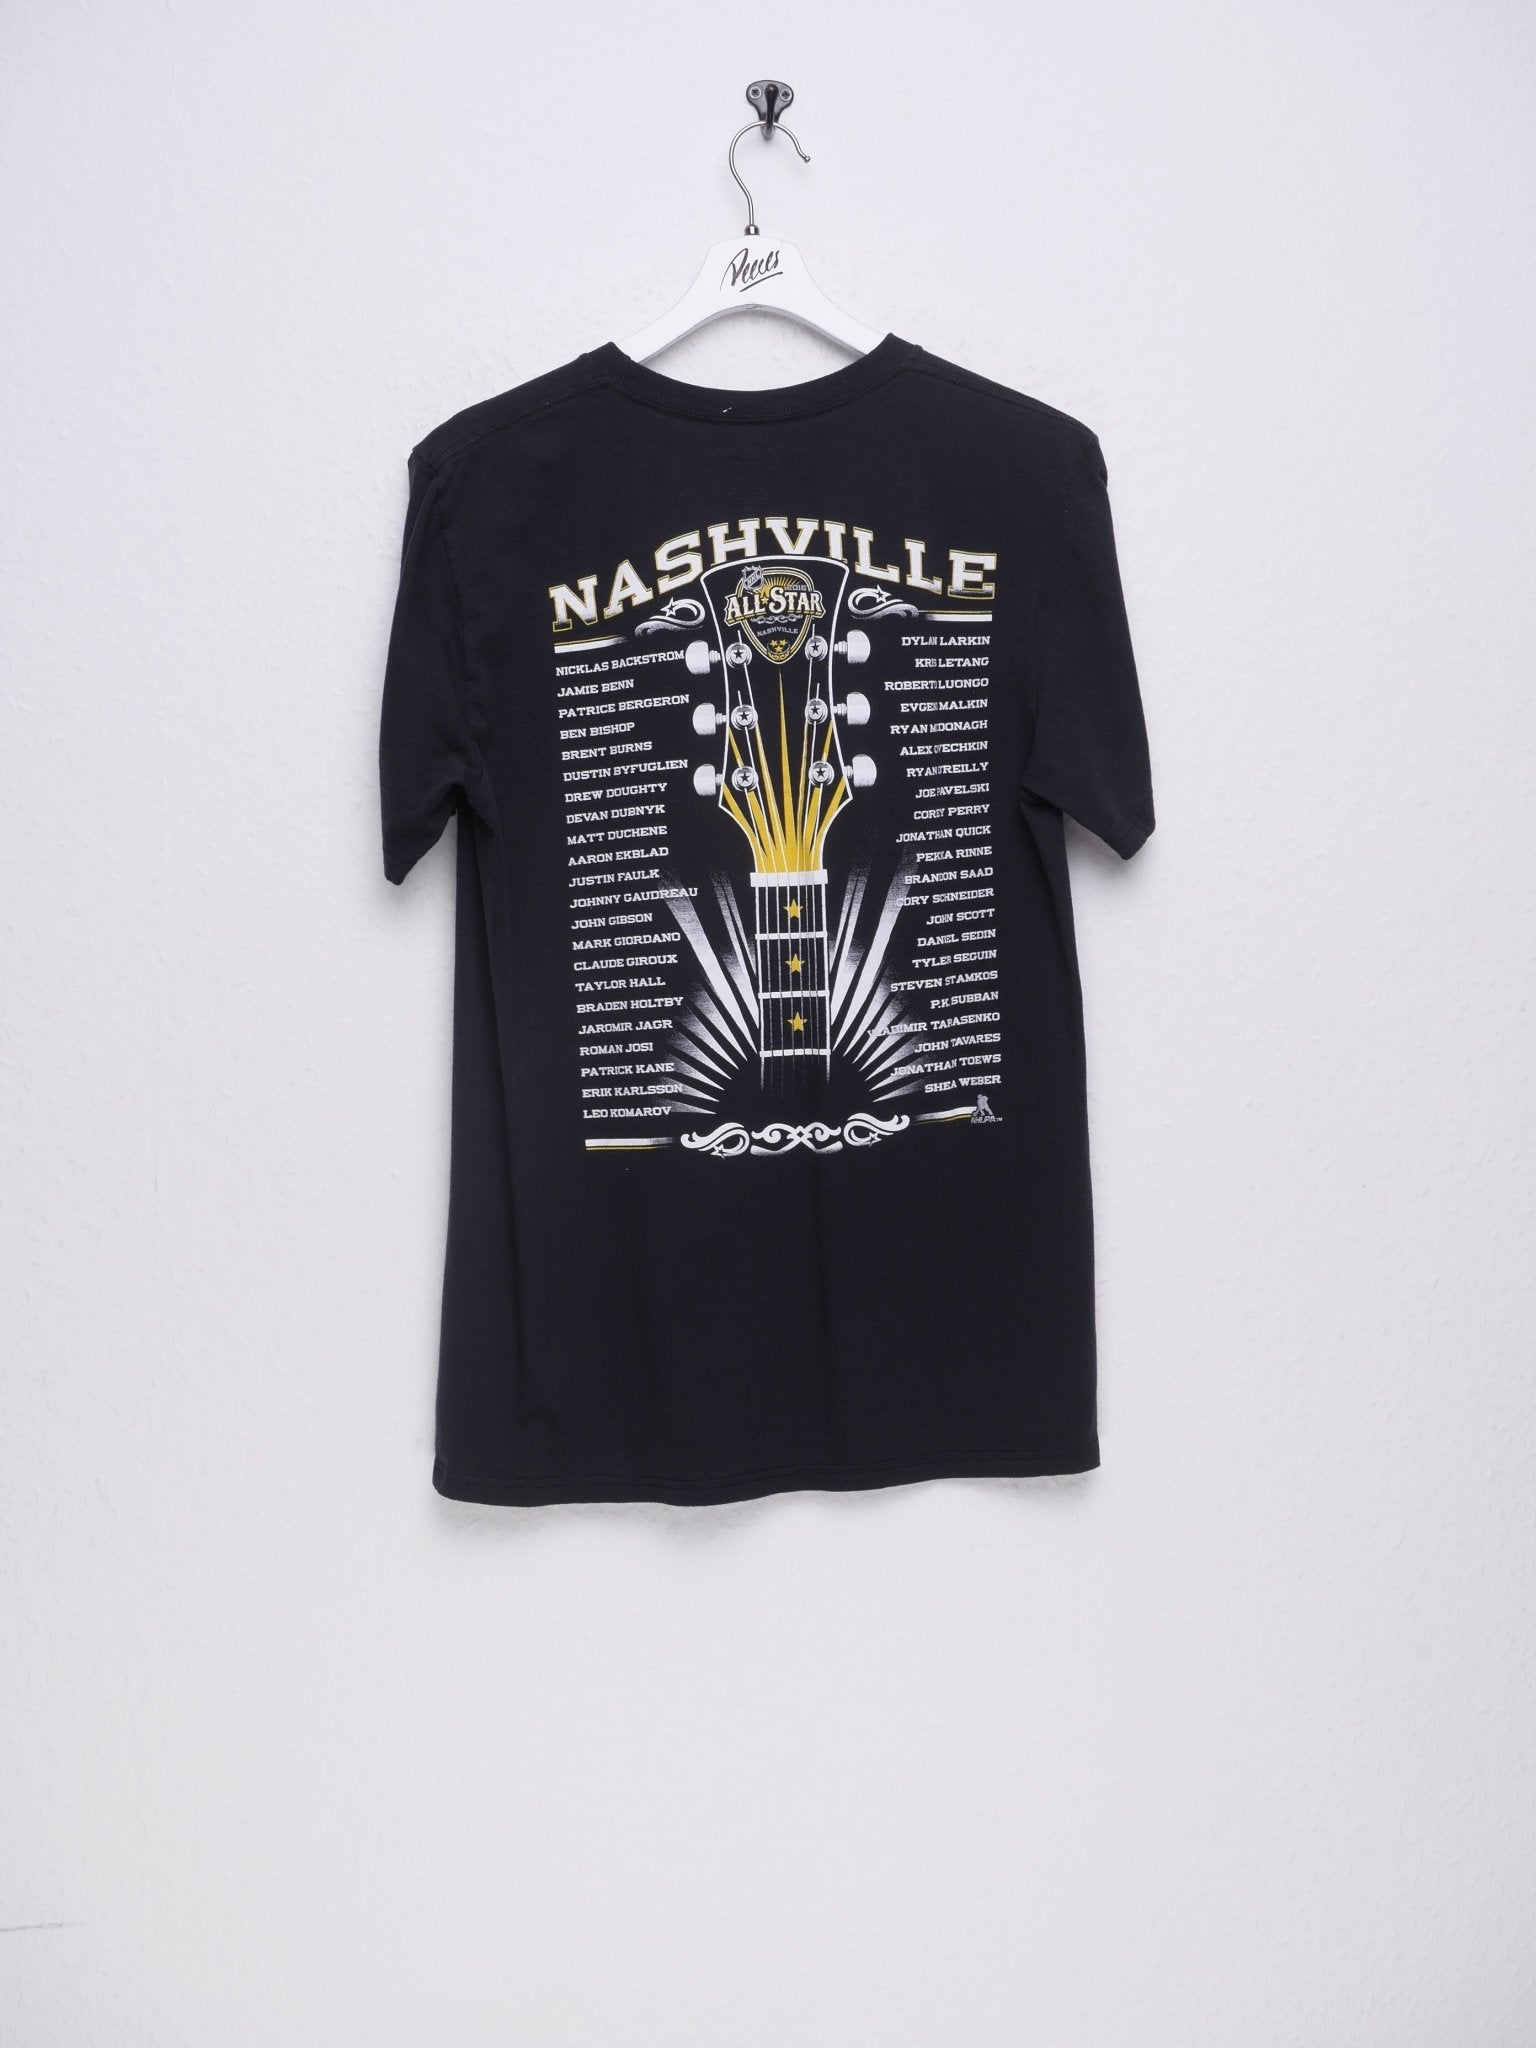 Reebok printed All Star Nashville Graphic Vintage Shirt - Peeces